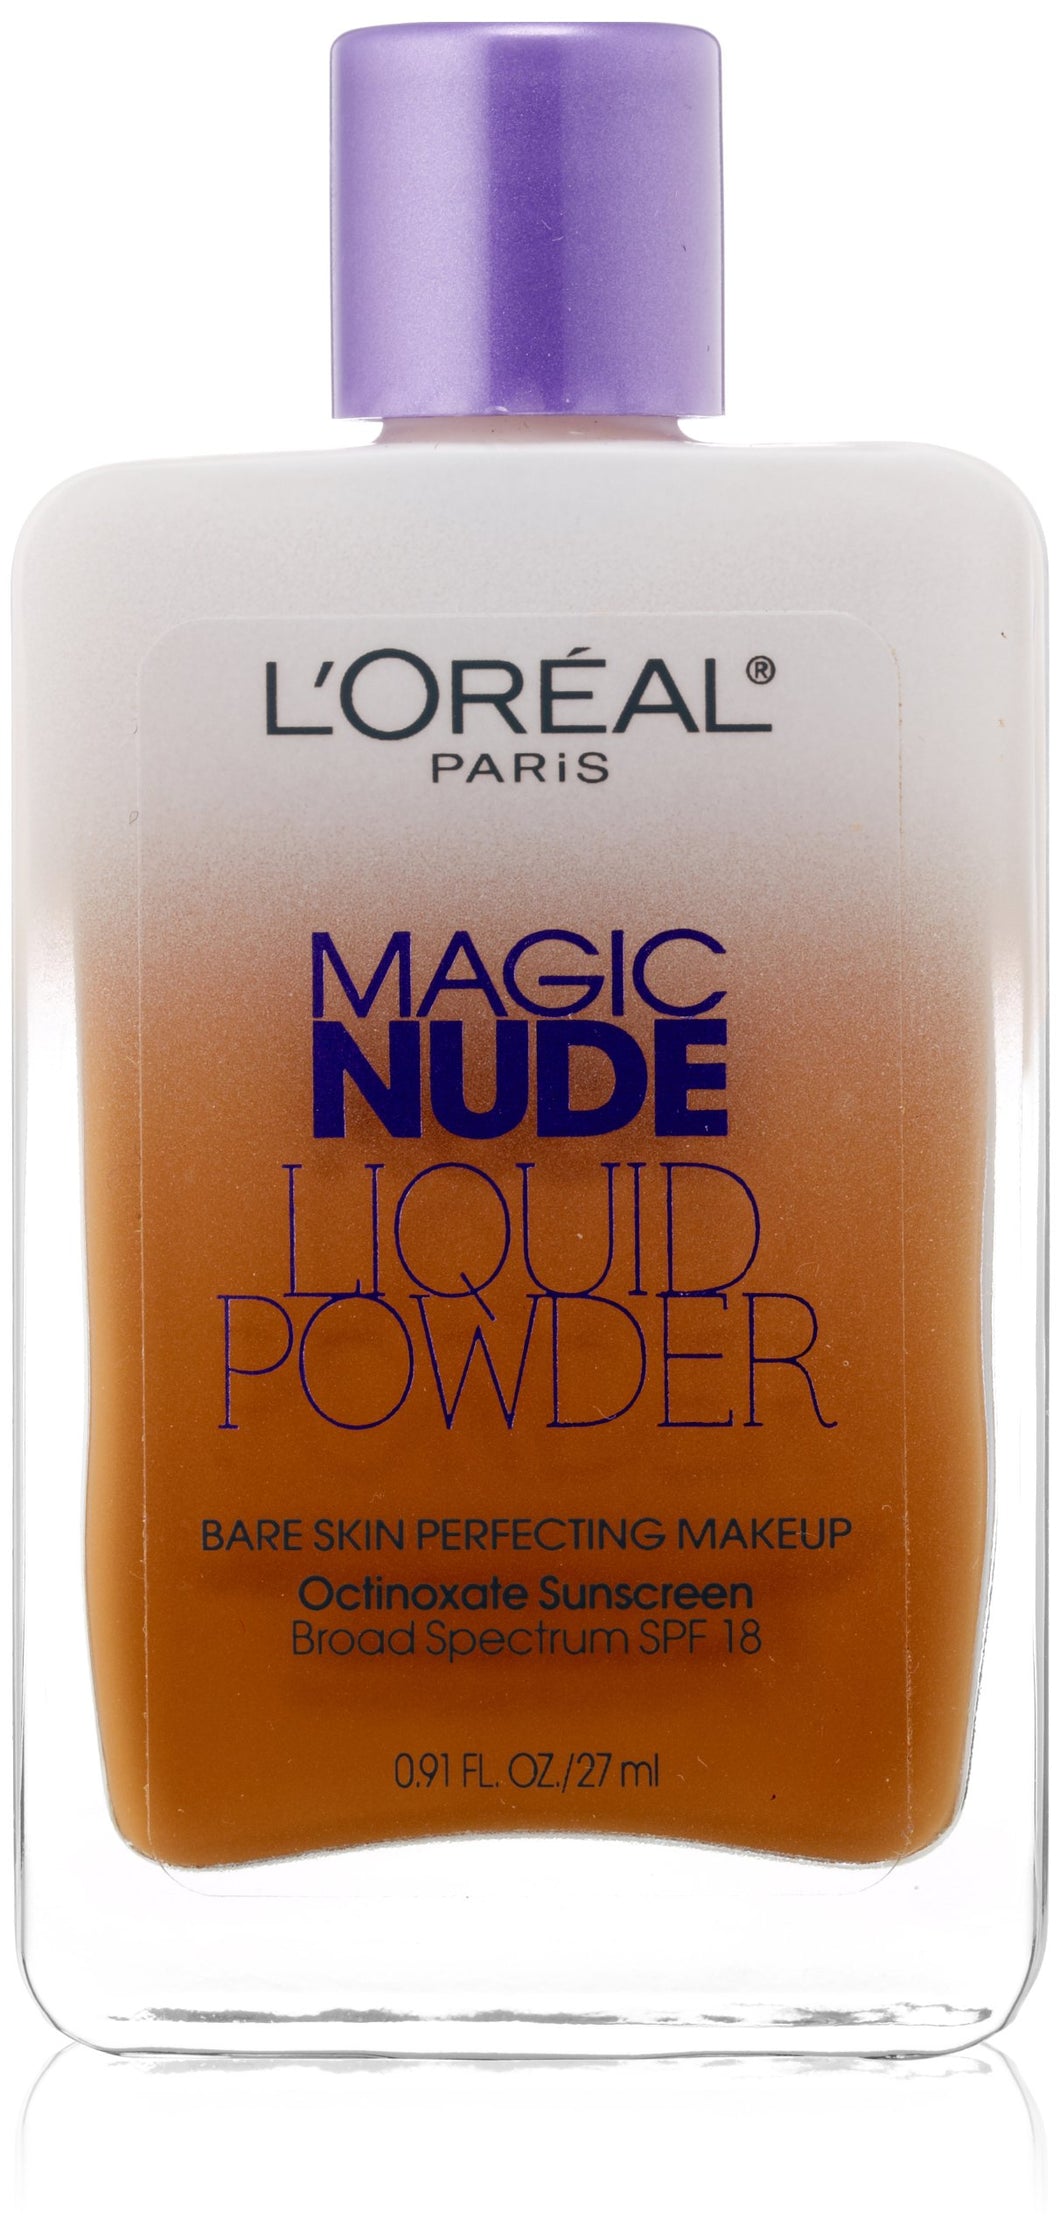 L'Oreal Paris Magic Nude Liquid Powder Bare Skin Perfecting Makeup SPF 18, So...